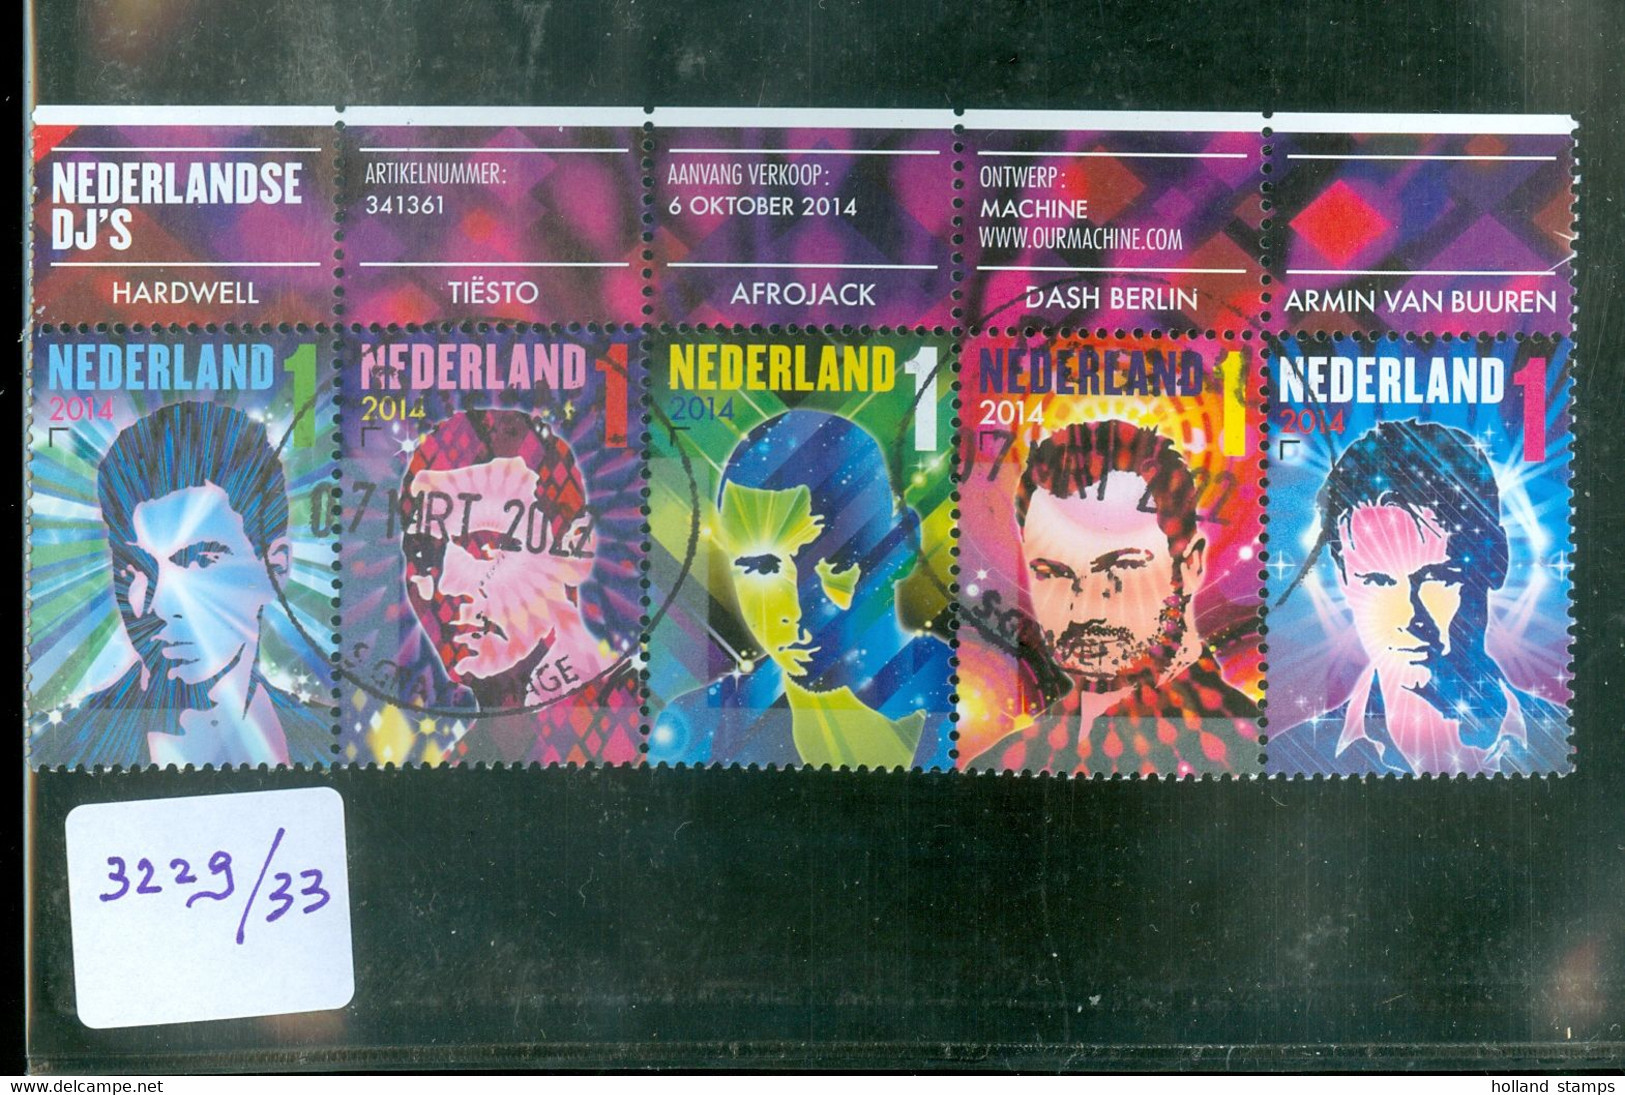 NEDERLAND * 2014 * NVPH 3229 - 3233 * In Blok Van 5 *  POSTFRIS GESTEMPELD *  DJ's - Used Stamps